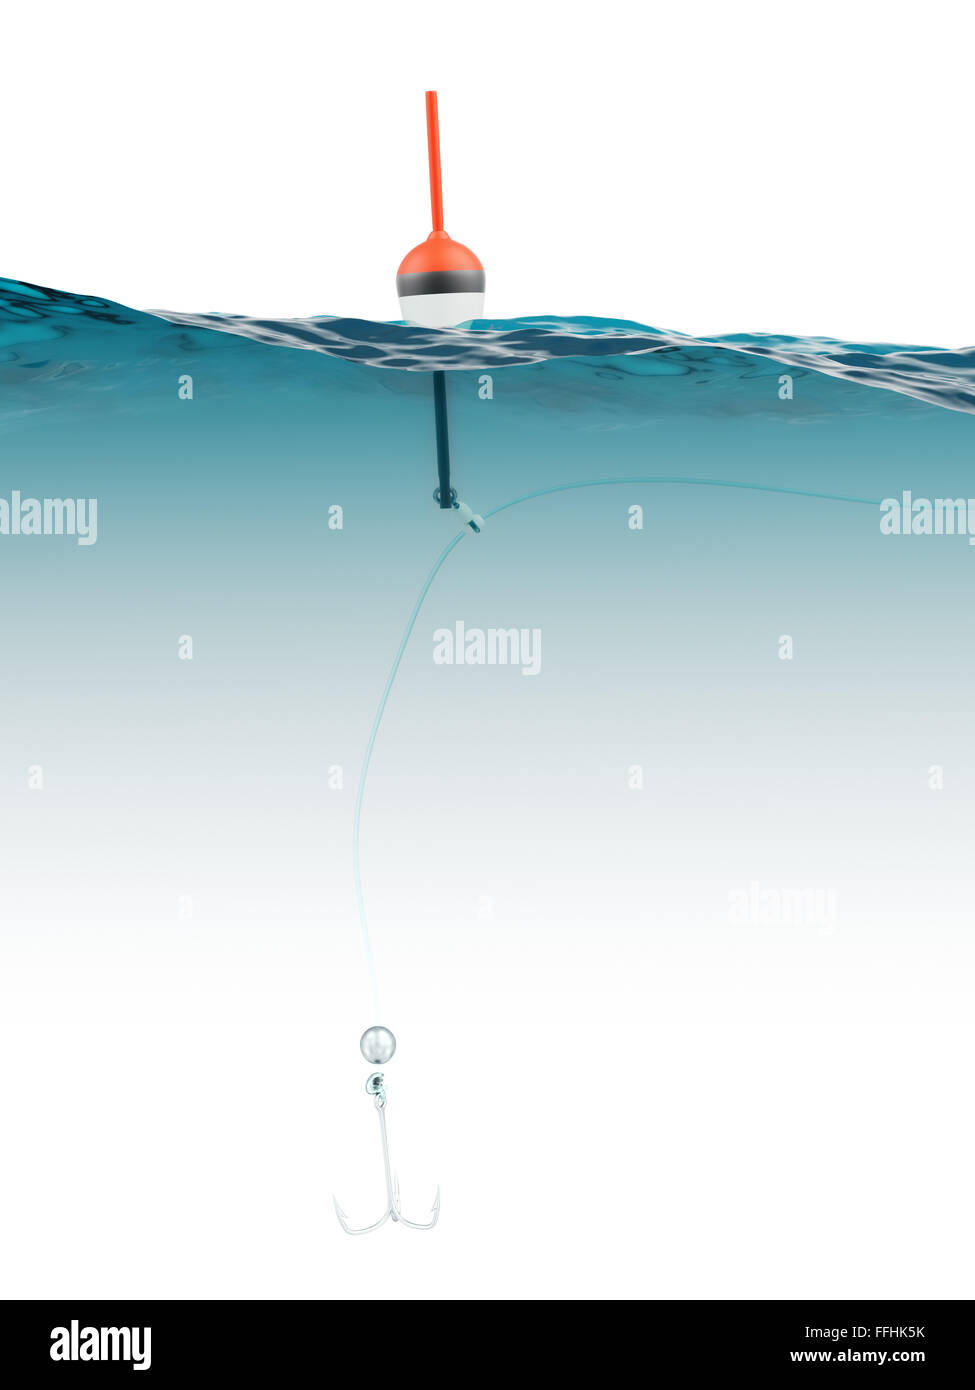 https://c8.alamy.com/comp/FFHK5K/bobber-with-fishing-line-and-hook-under-water-closeup-FFHK5K.jpg